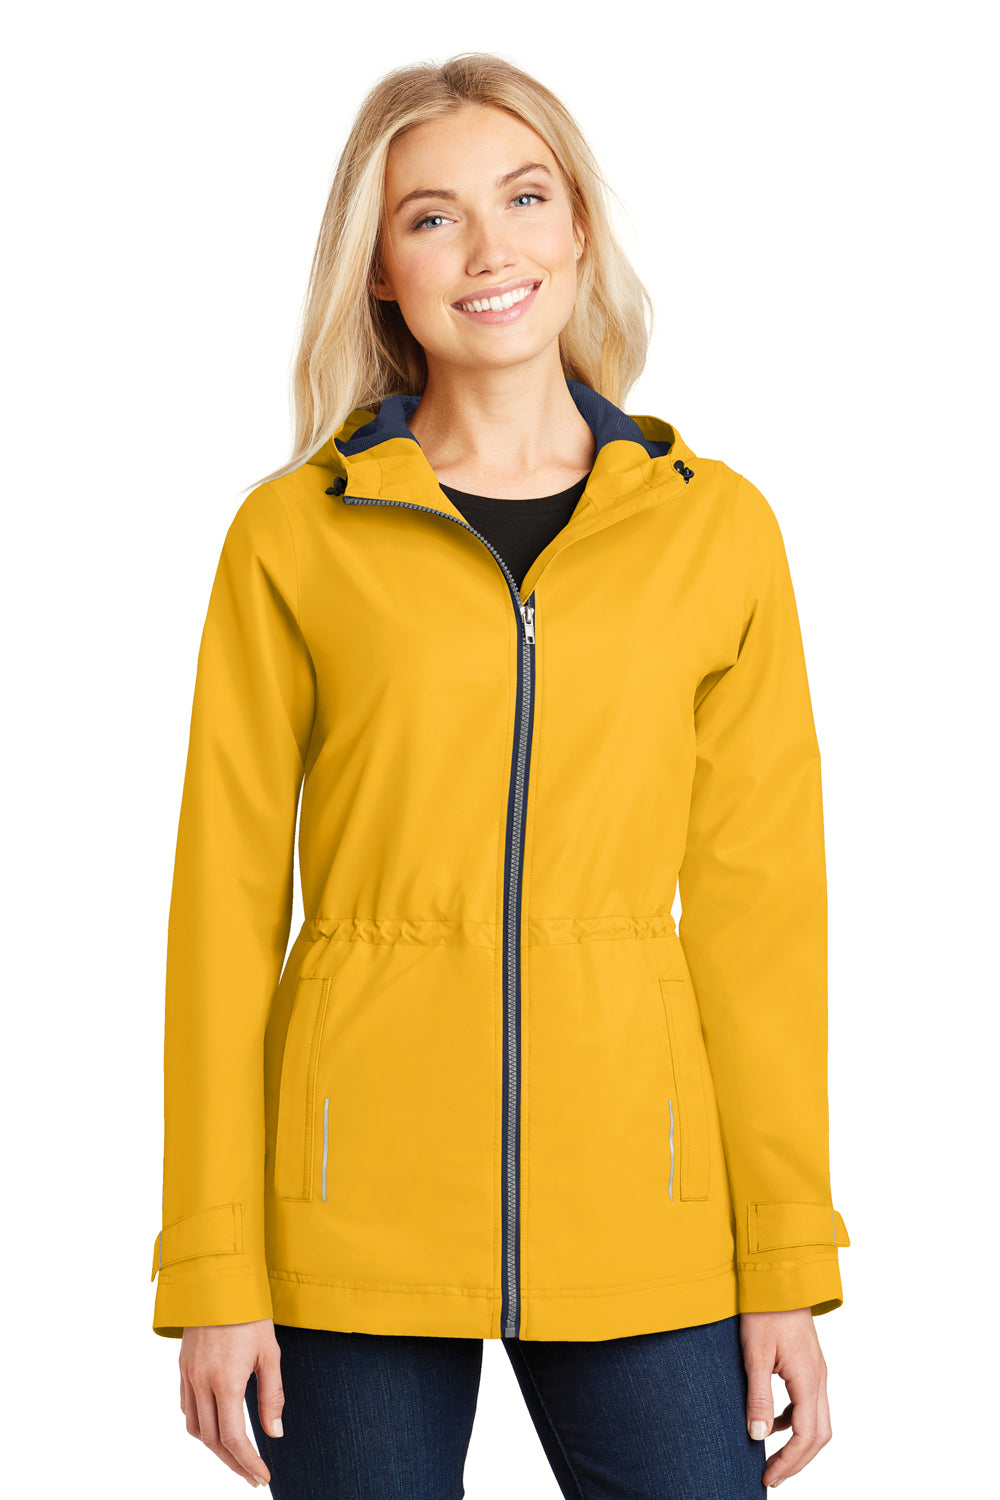 Port Authority L7710 Womens Northwest Slicker Waterproof Full Zip Hooded Jacket Yellow Front